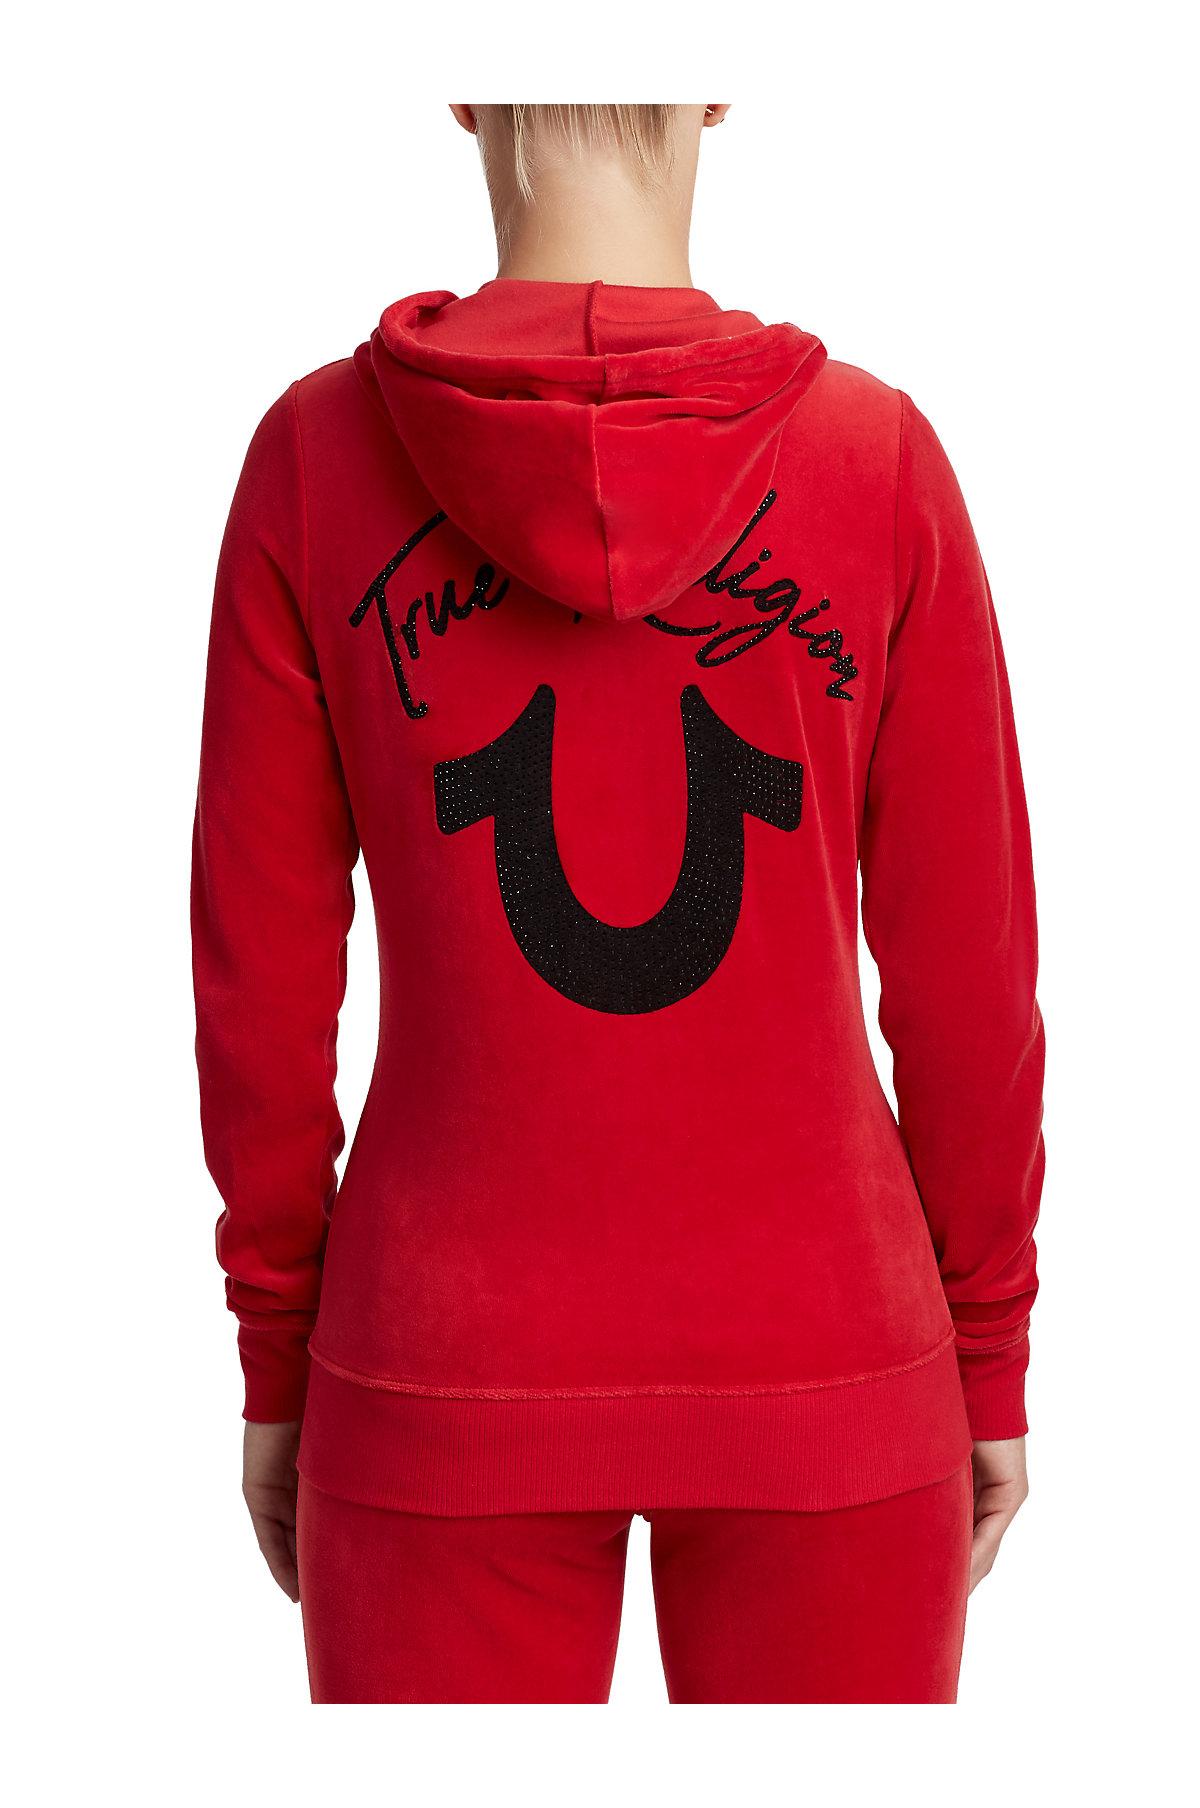 true religion sweater red